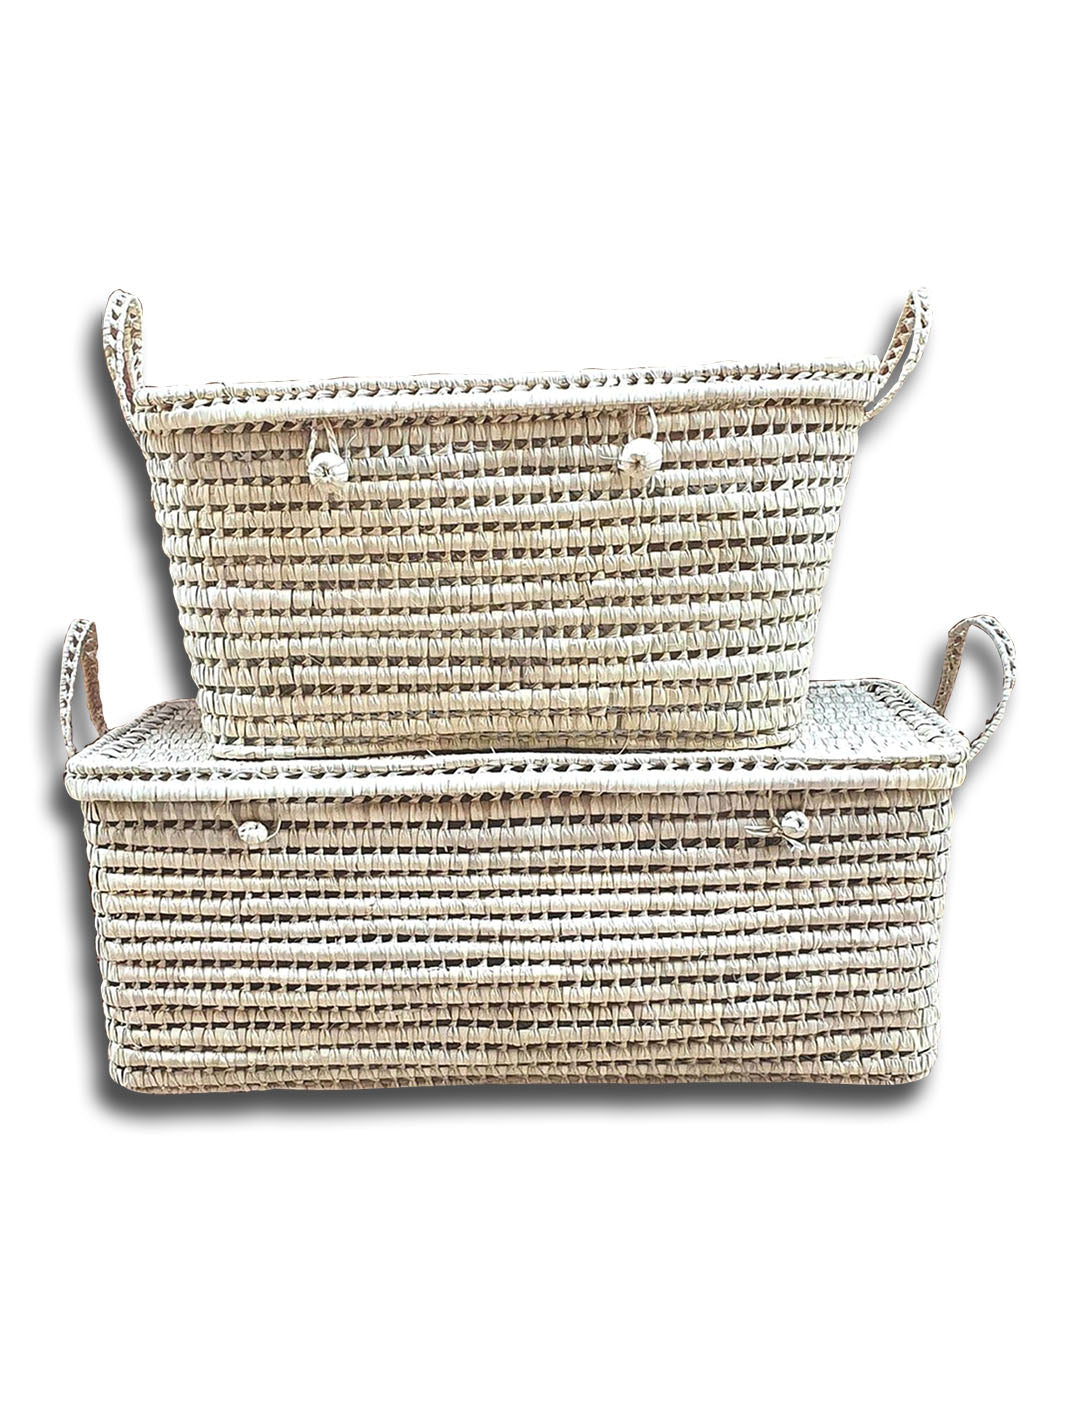 Handcrafted Duo Palm Leaf Wicker Storage Basket Libitii Baskets LIB-0005